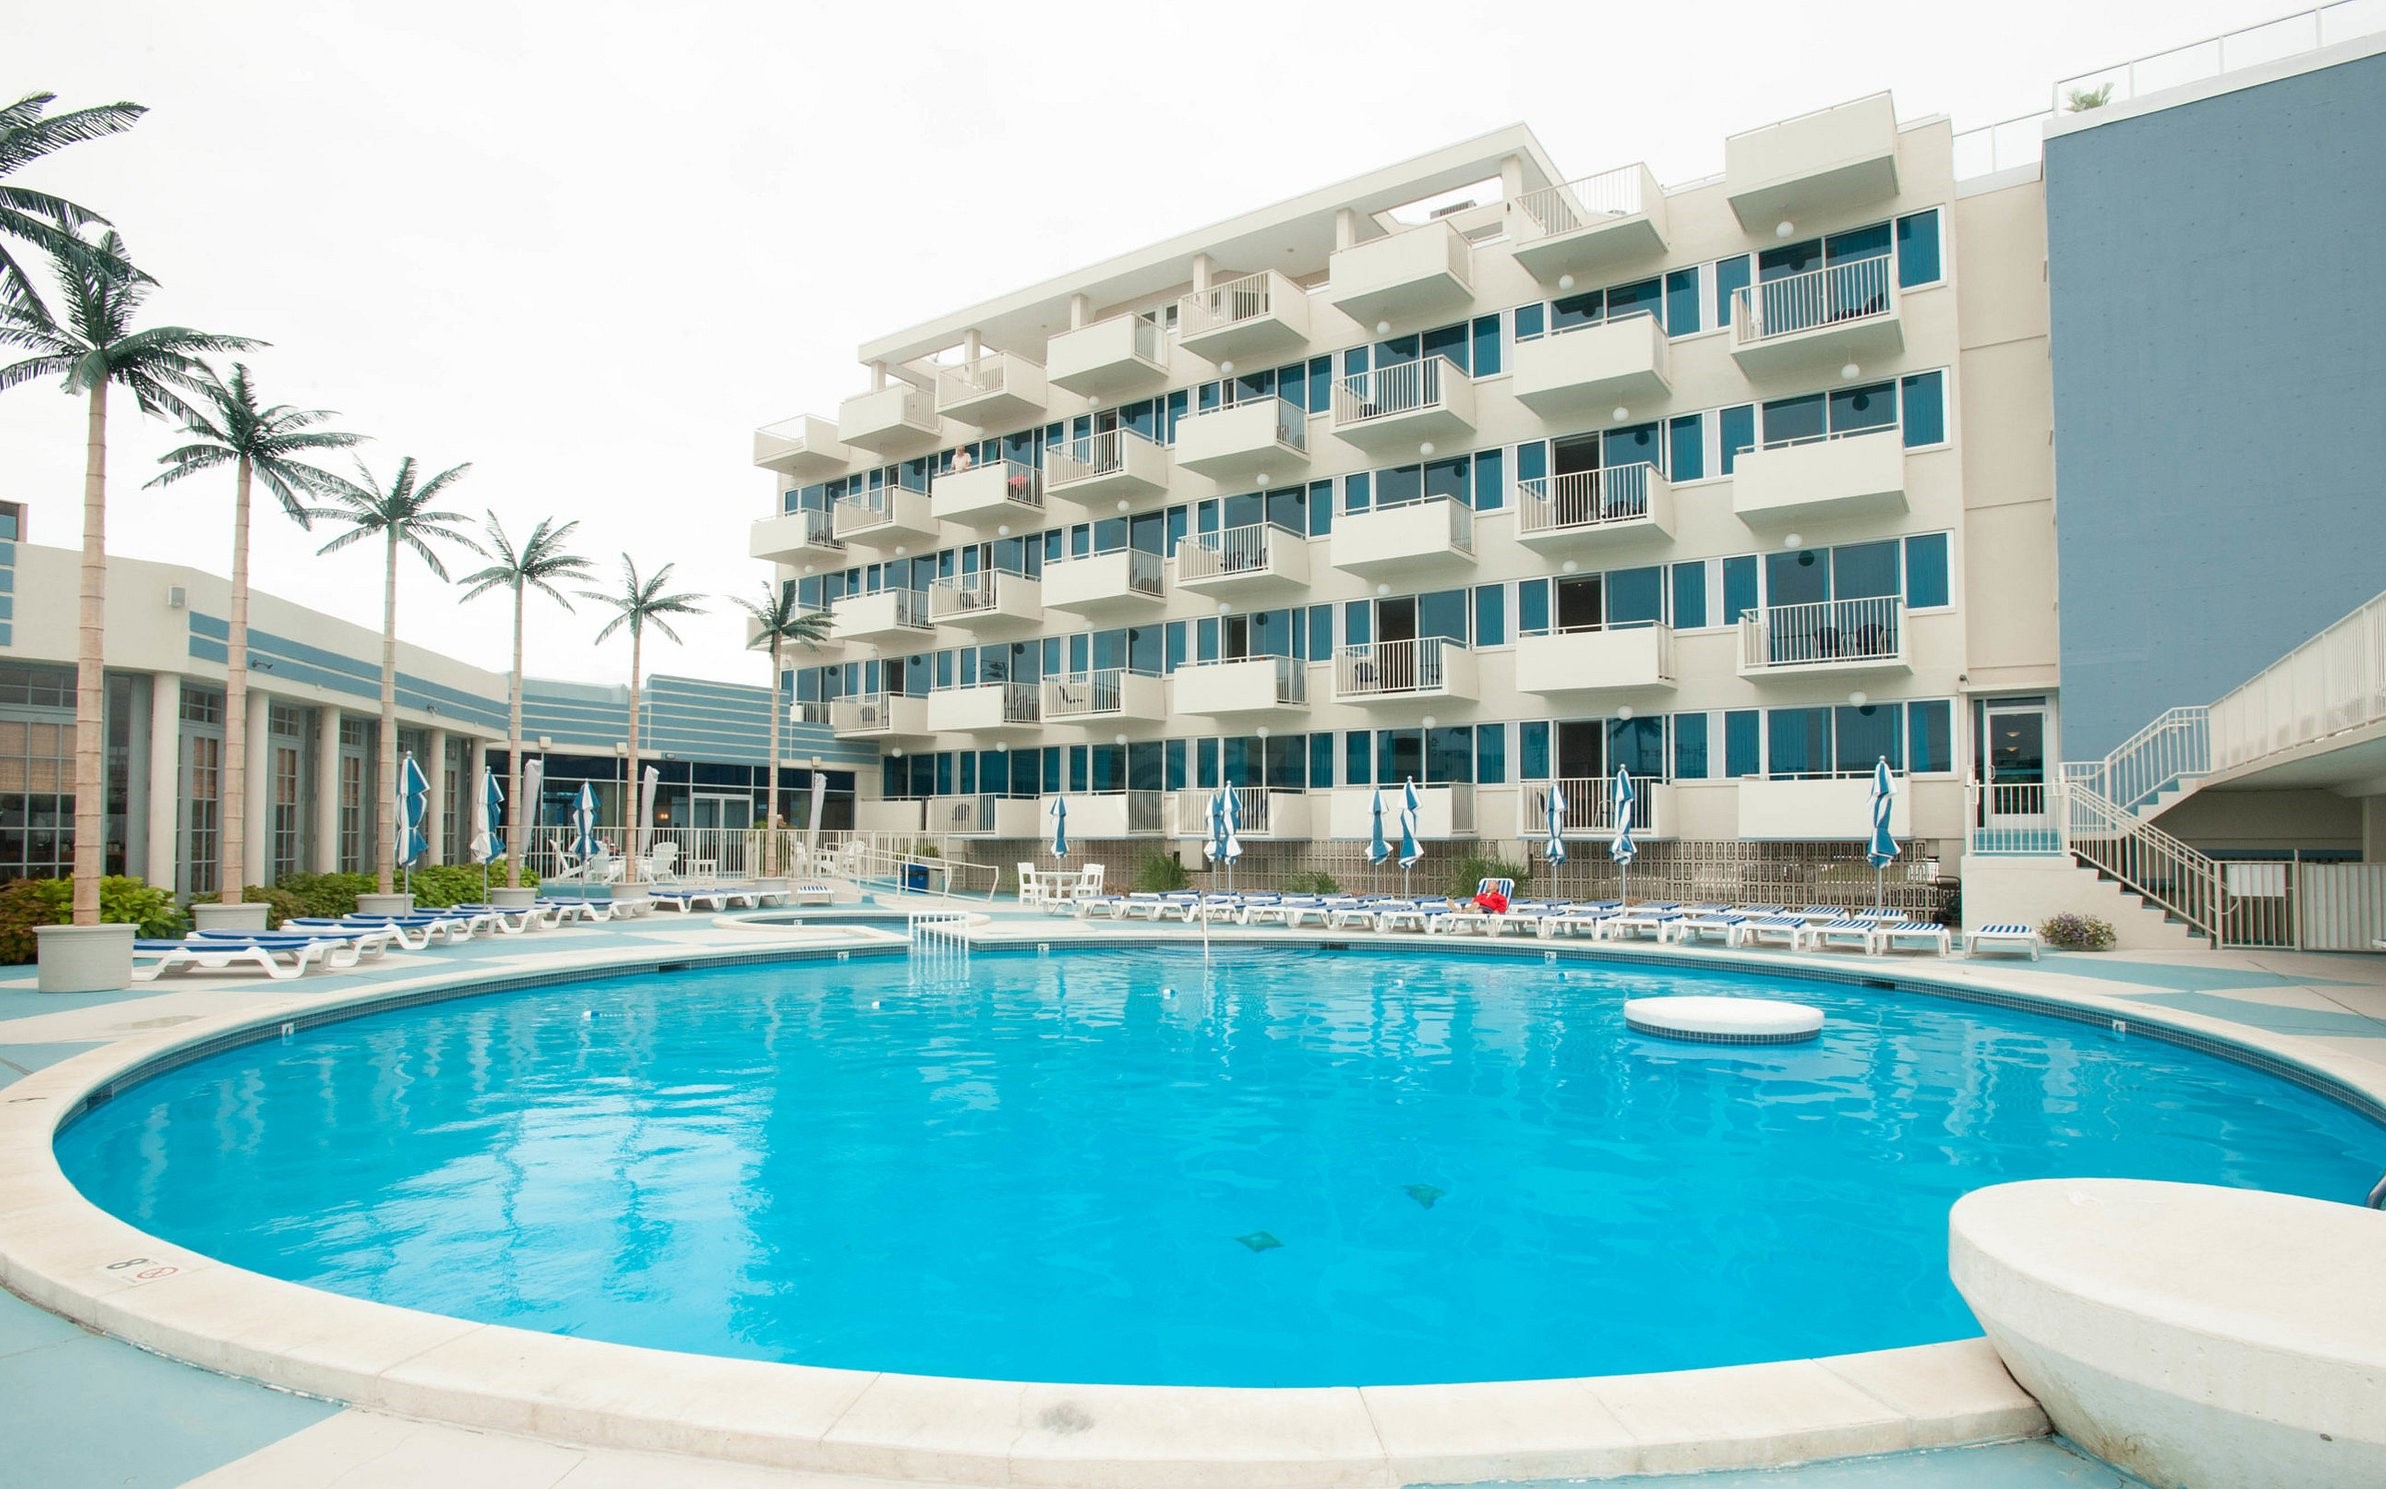 Pool view of Pan American Hotel